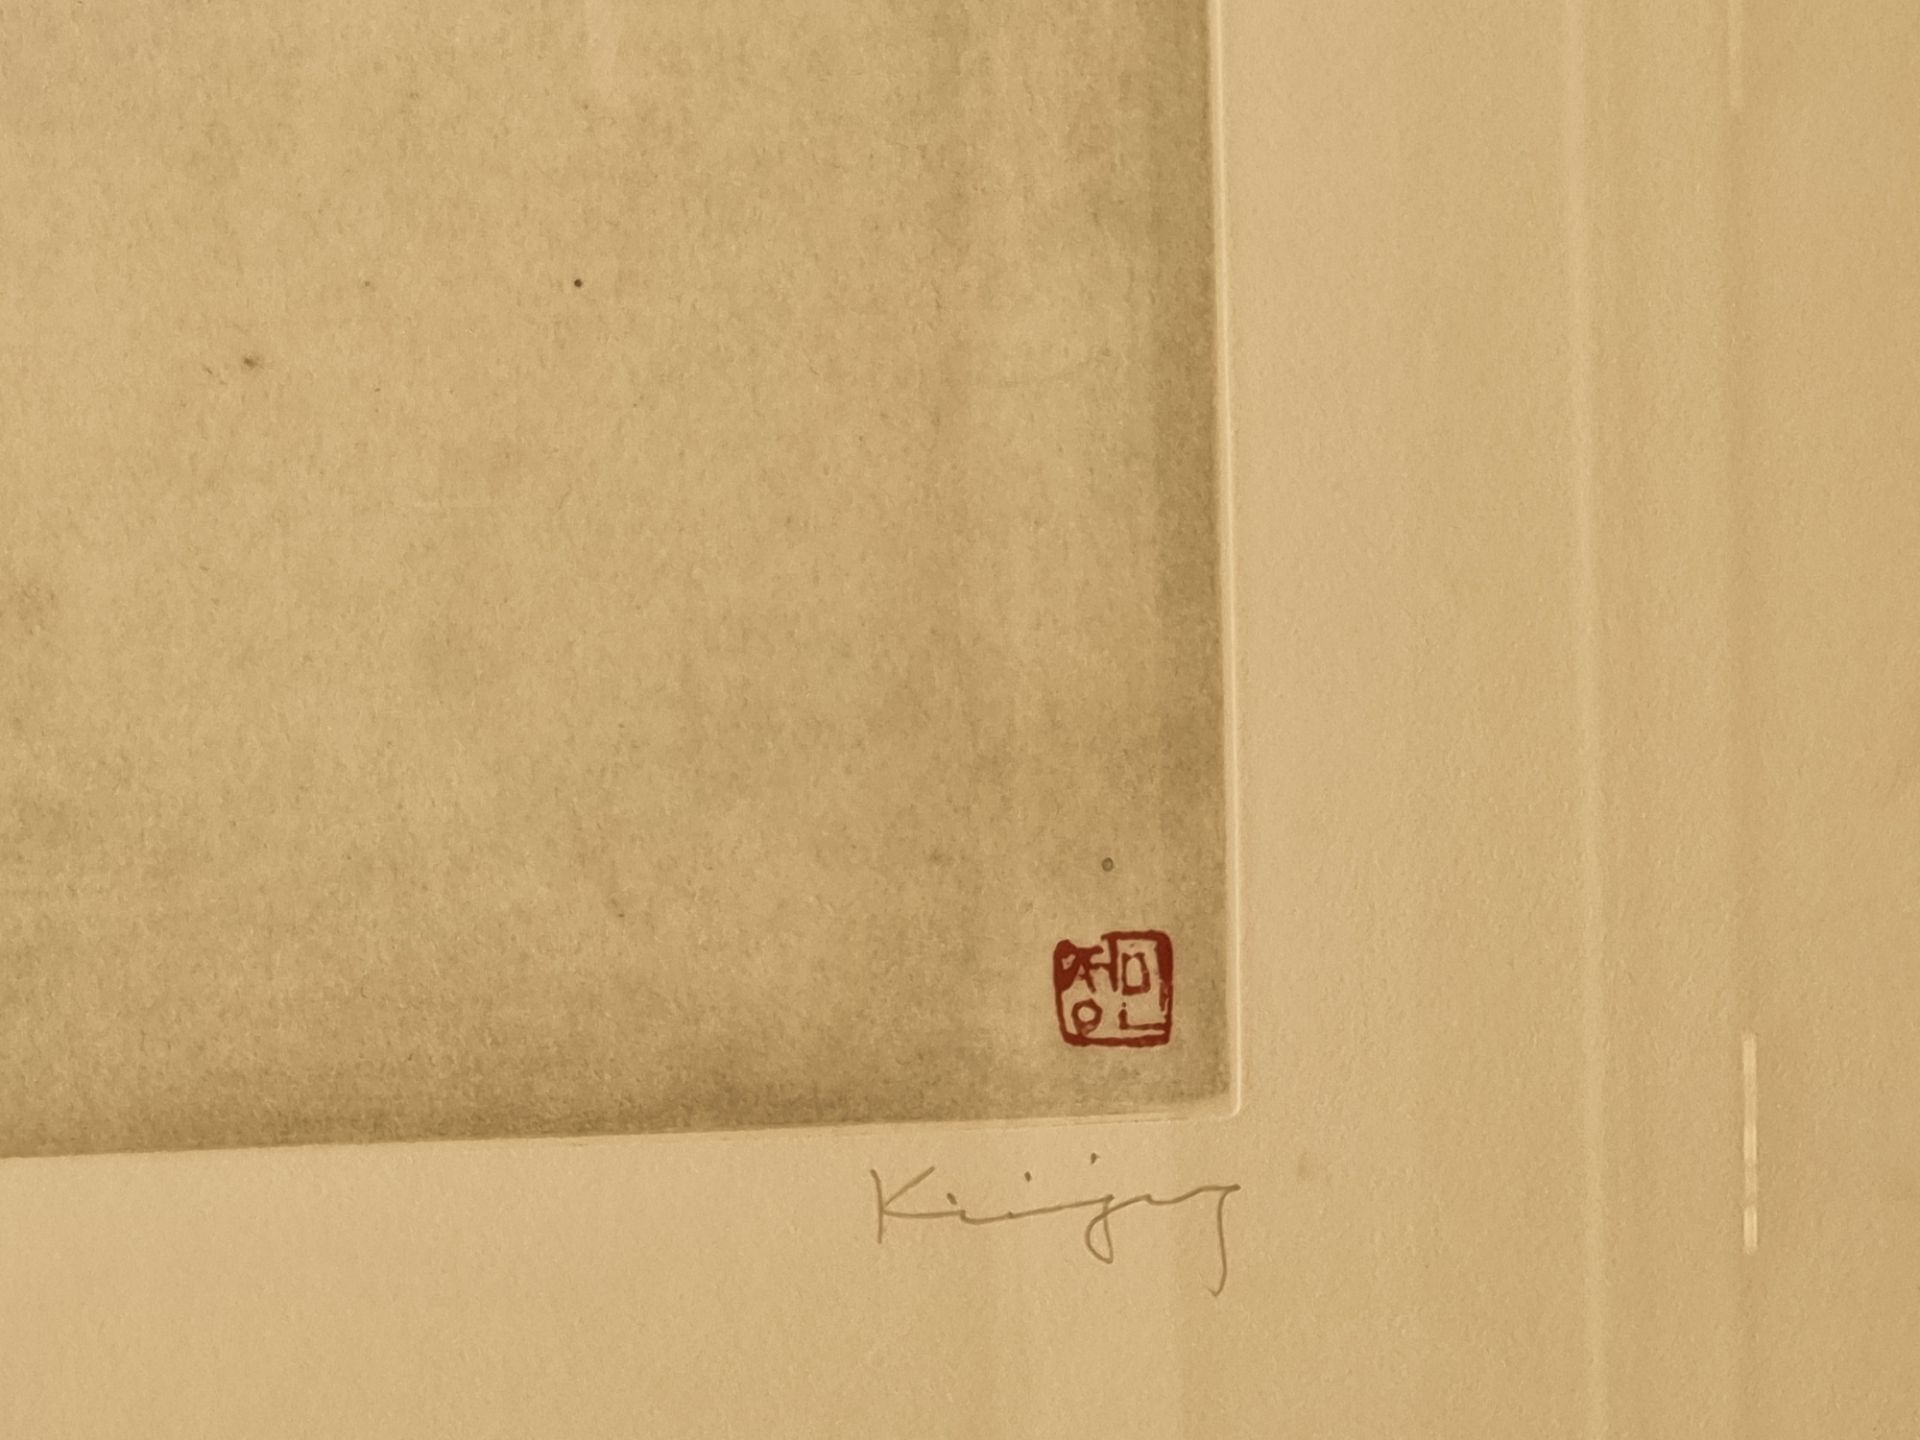 2 x Minjung Kim (Korean, b. 1962) framed limited editions on linen paper silver framed (Apt 10) - Image 3 of 6